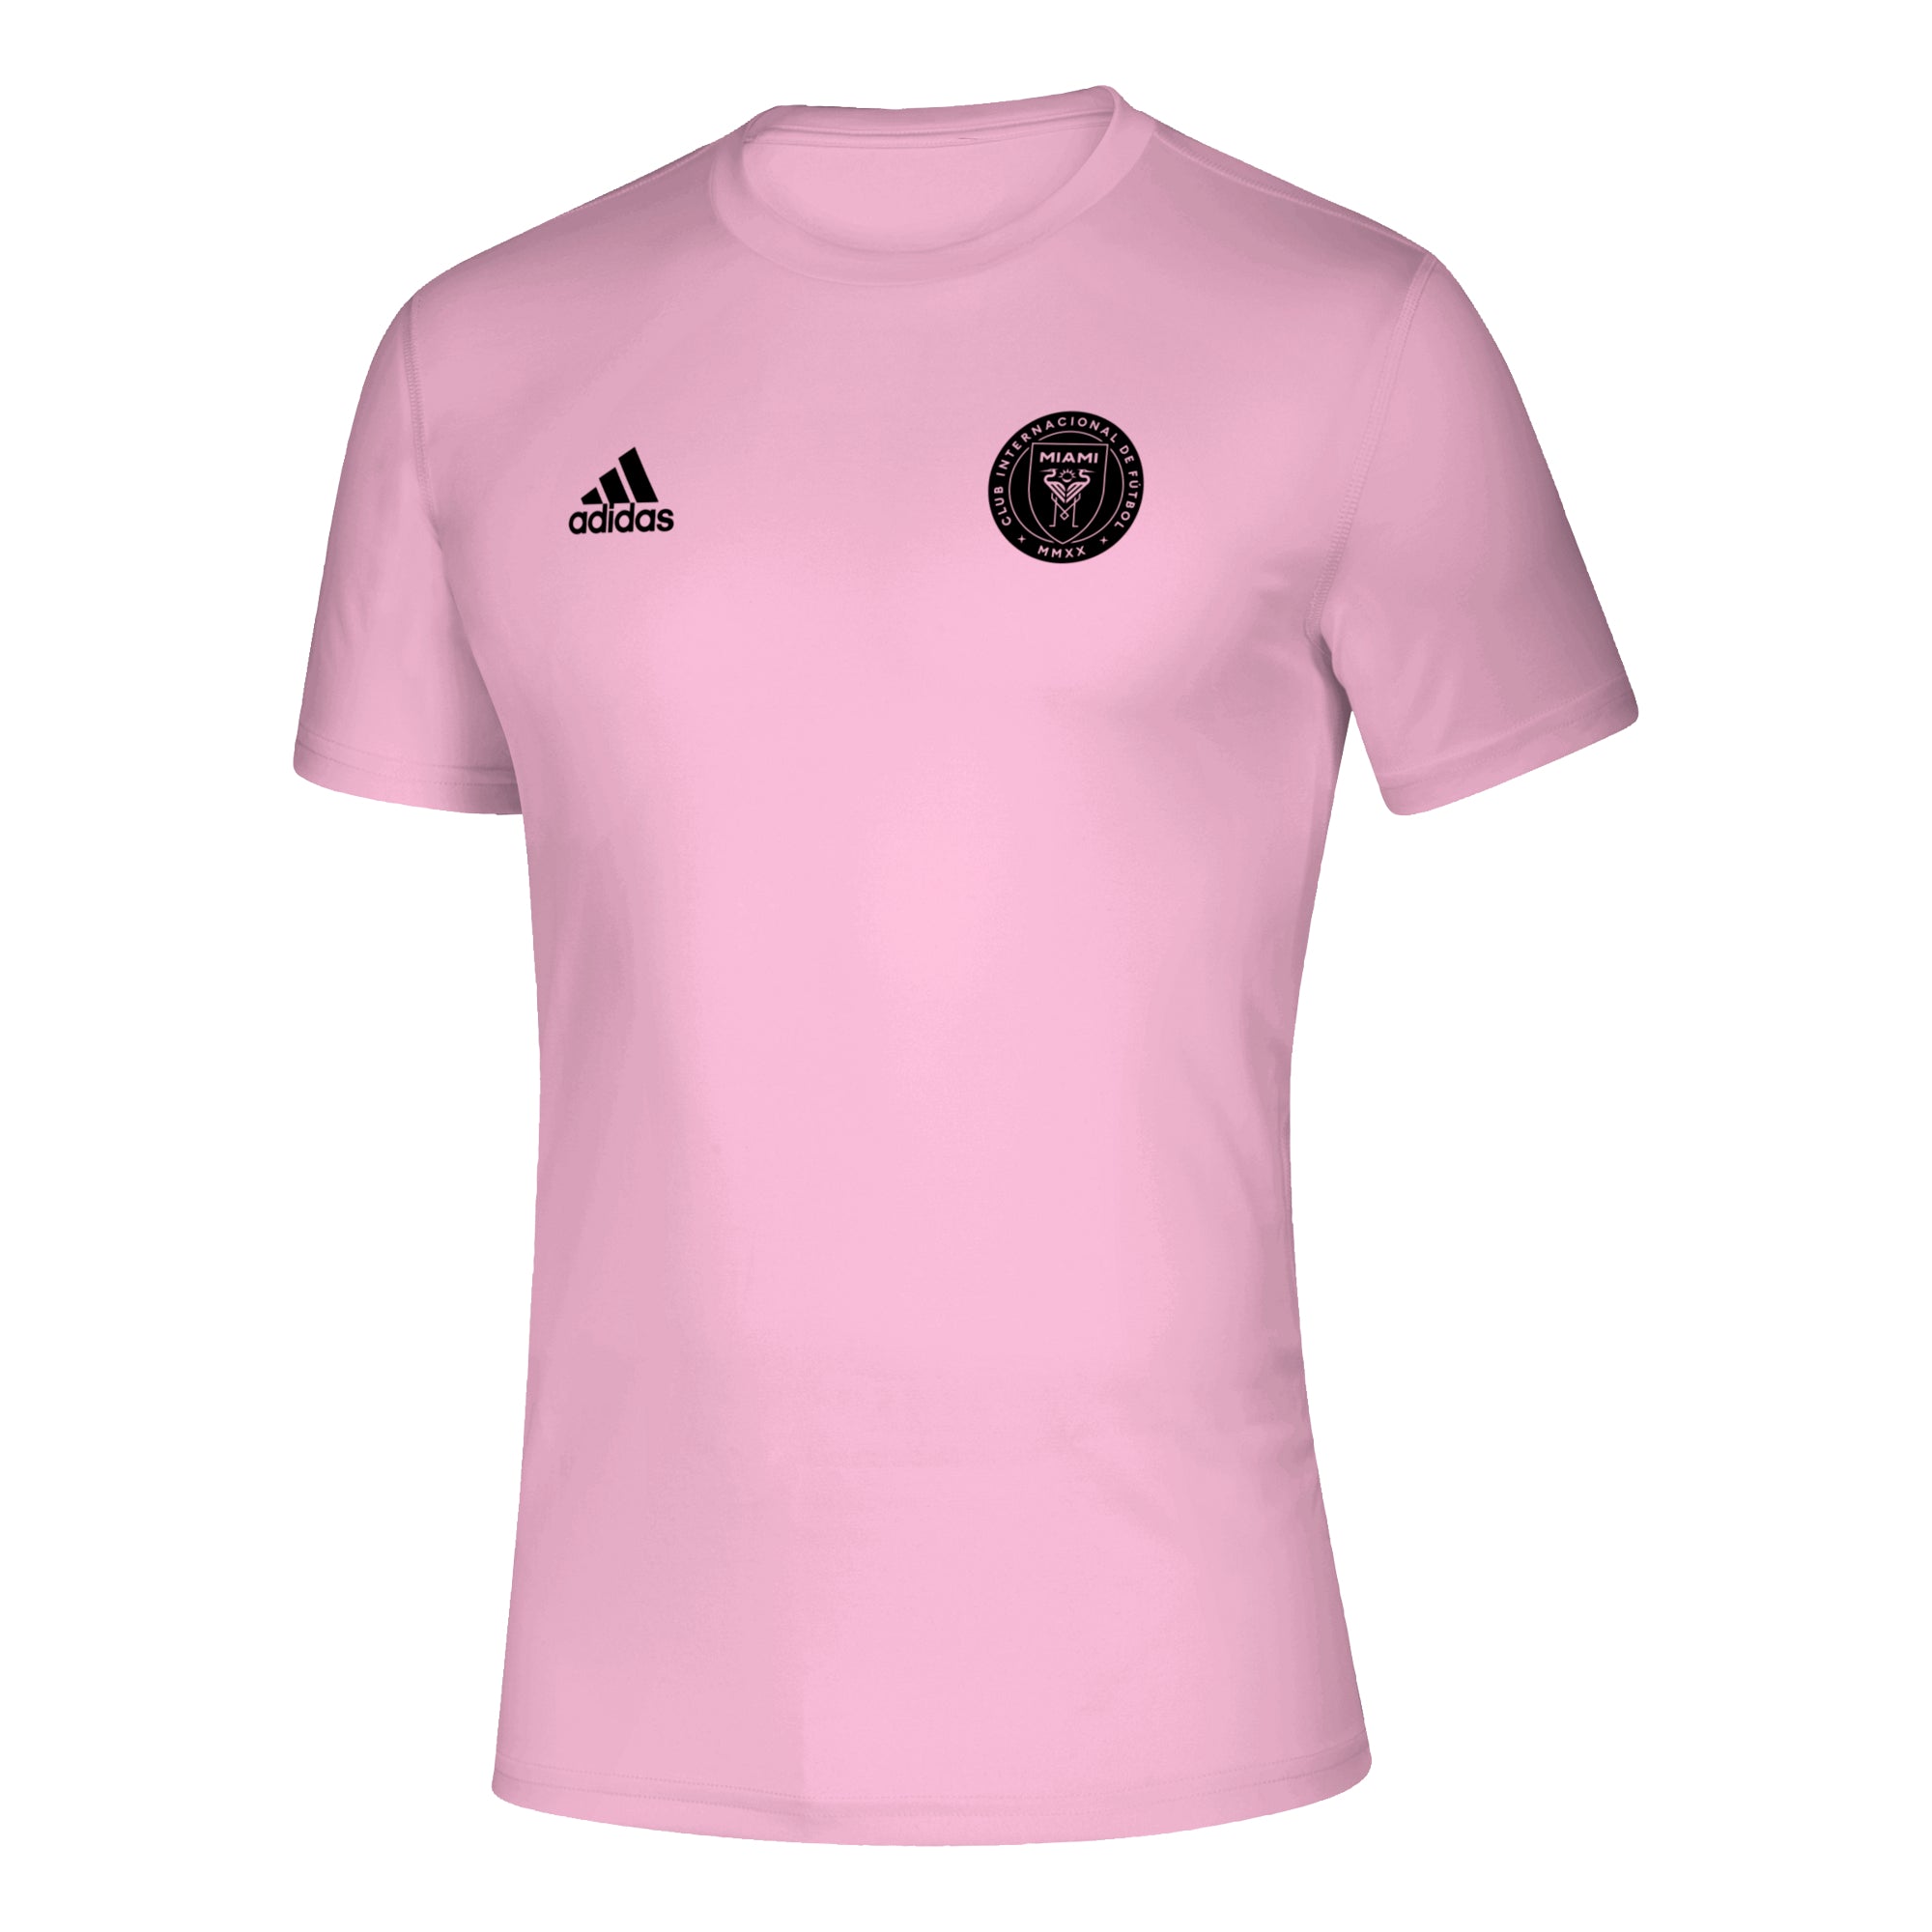 Inter Miami CF 2021 adidas Creator T-Shirt - Pink